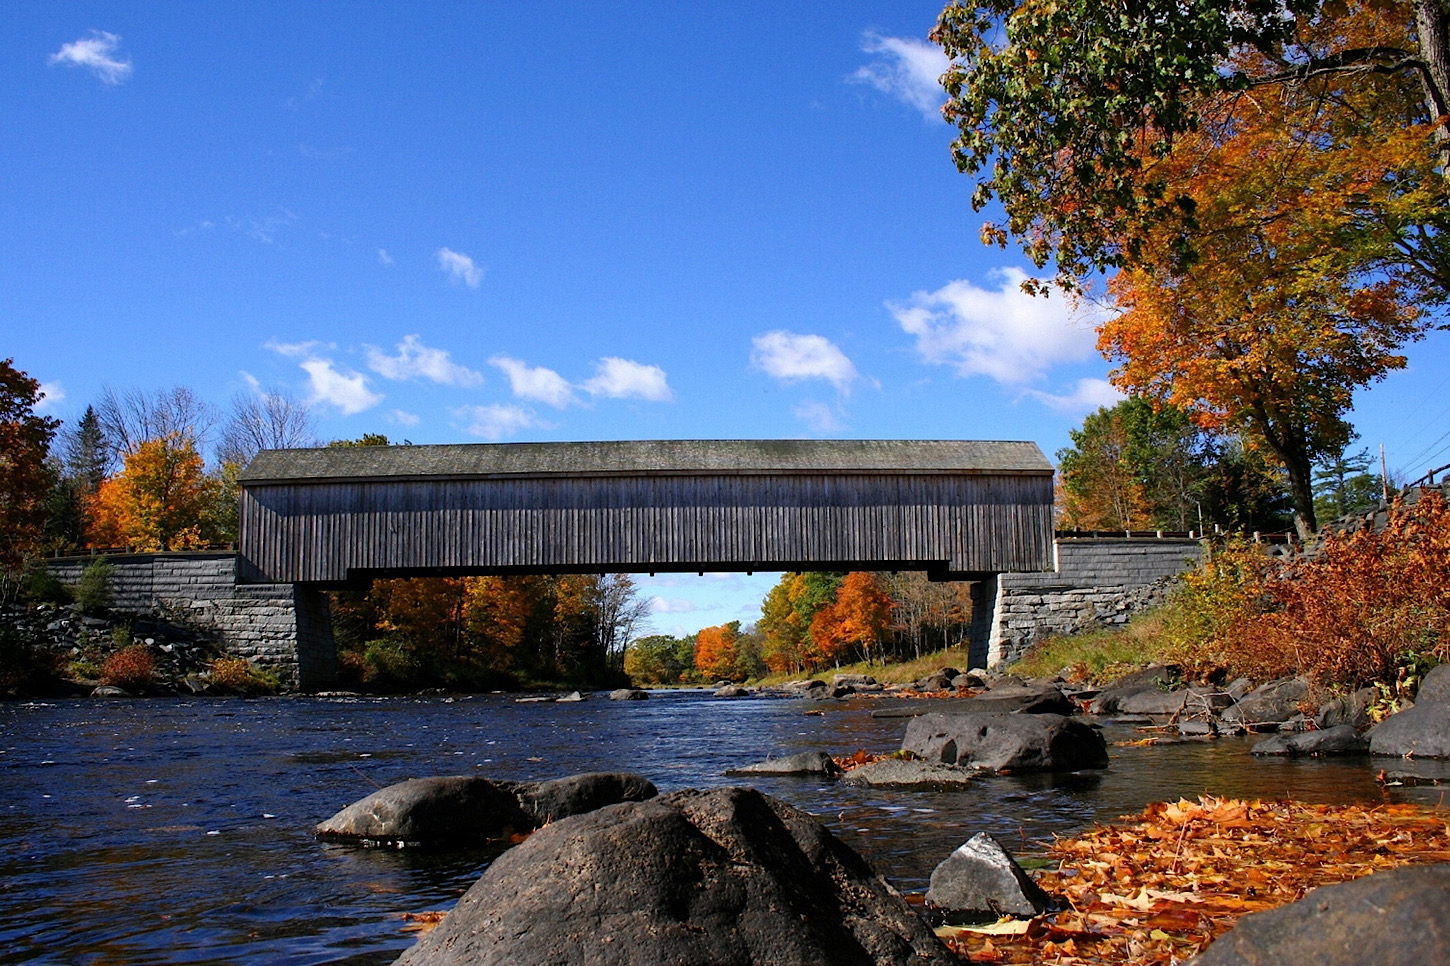 Lowe's Covered Bridge